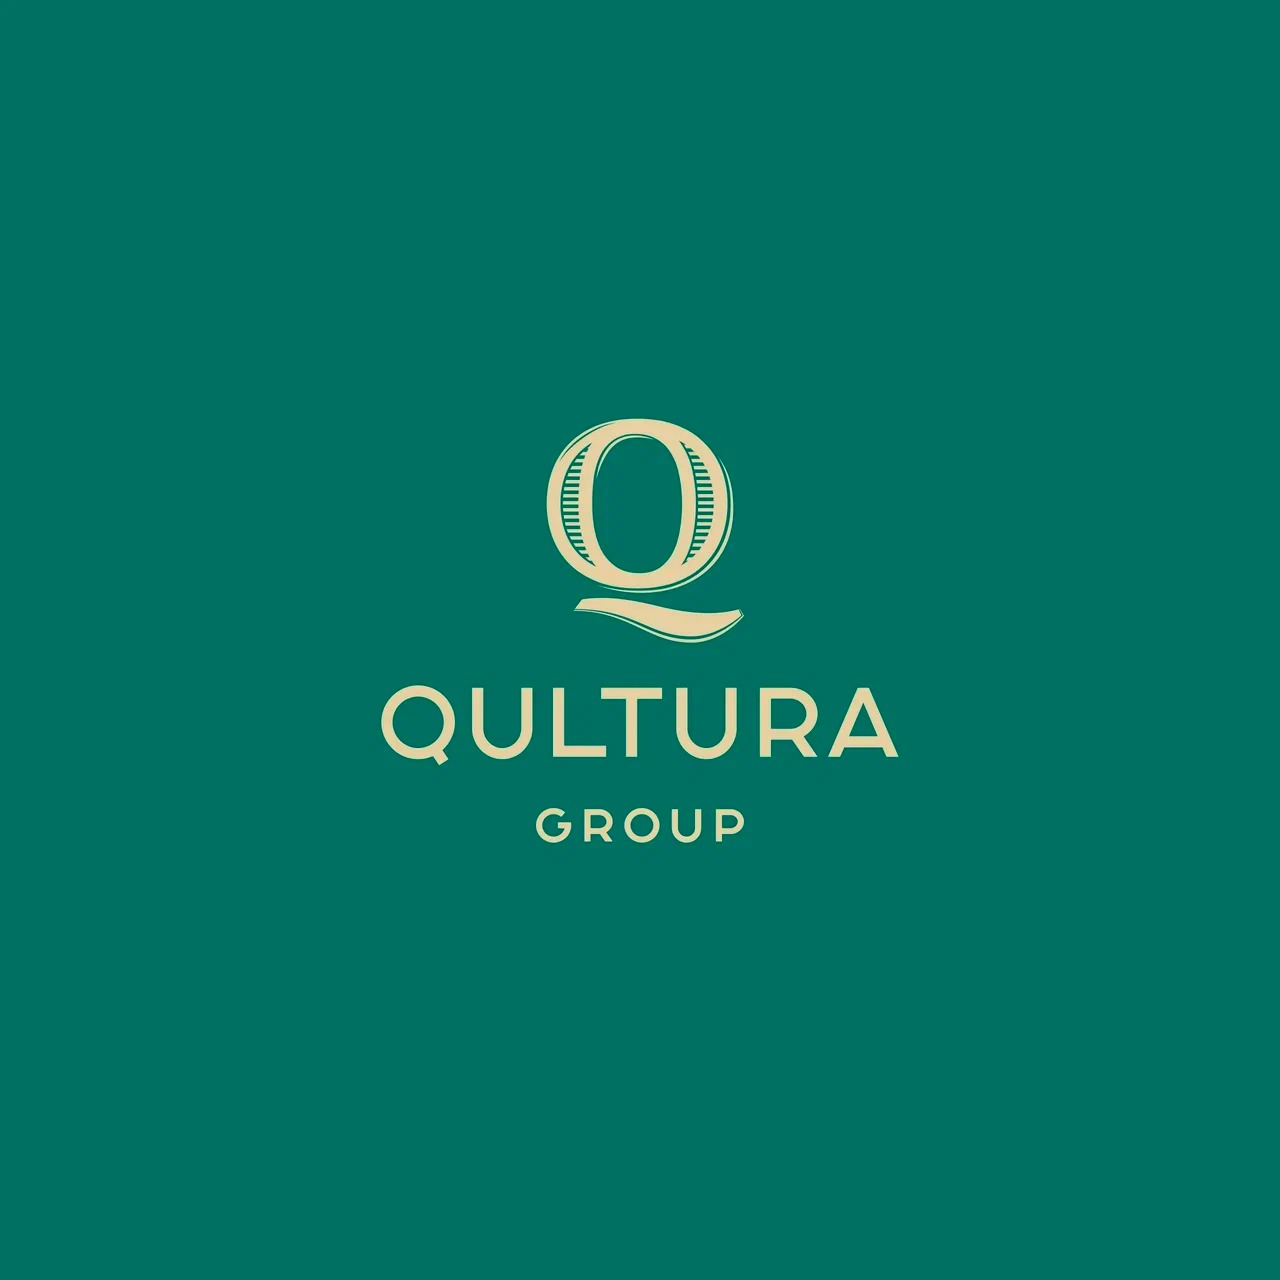 Qultura Group